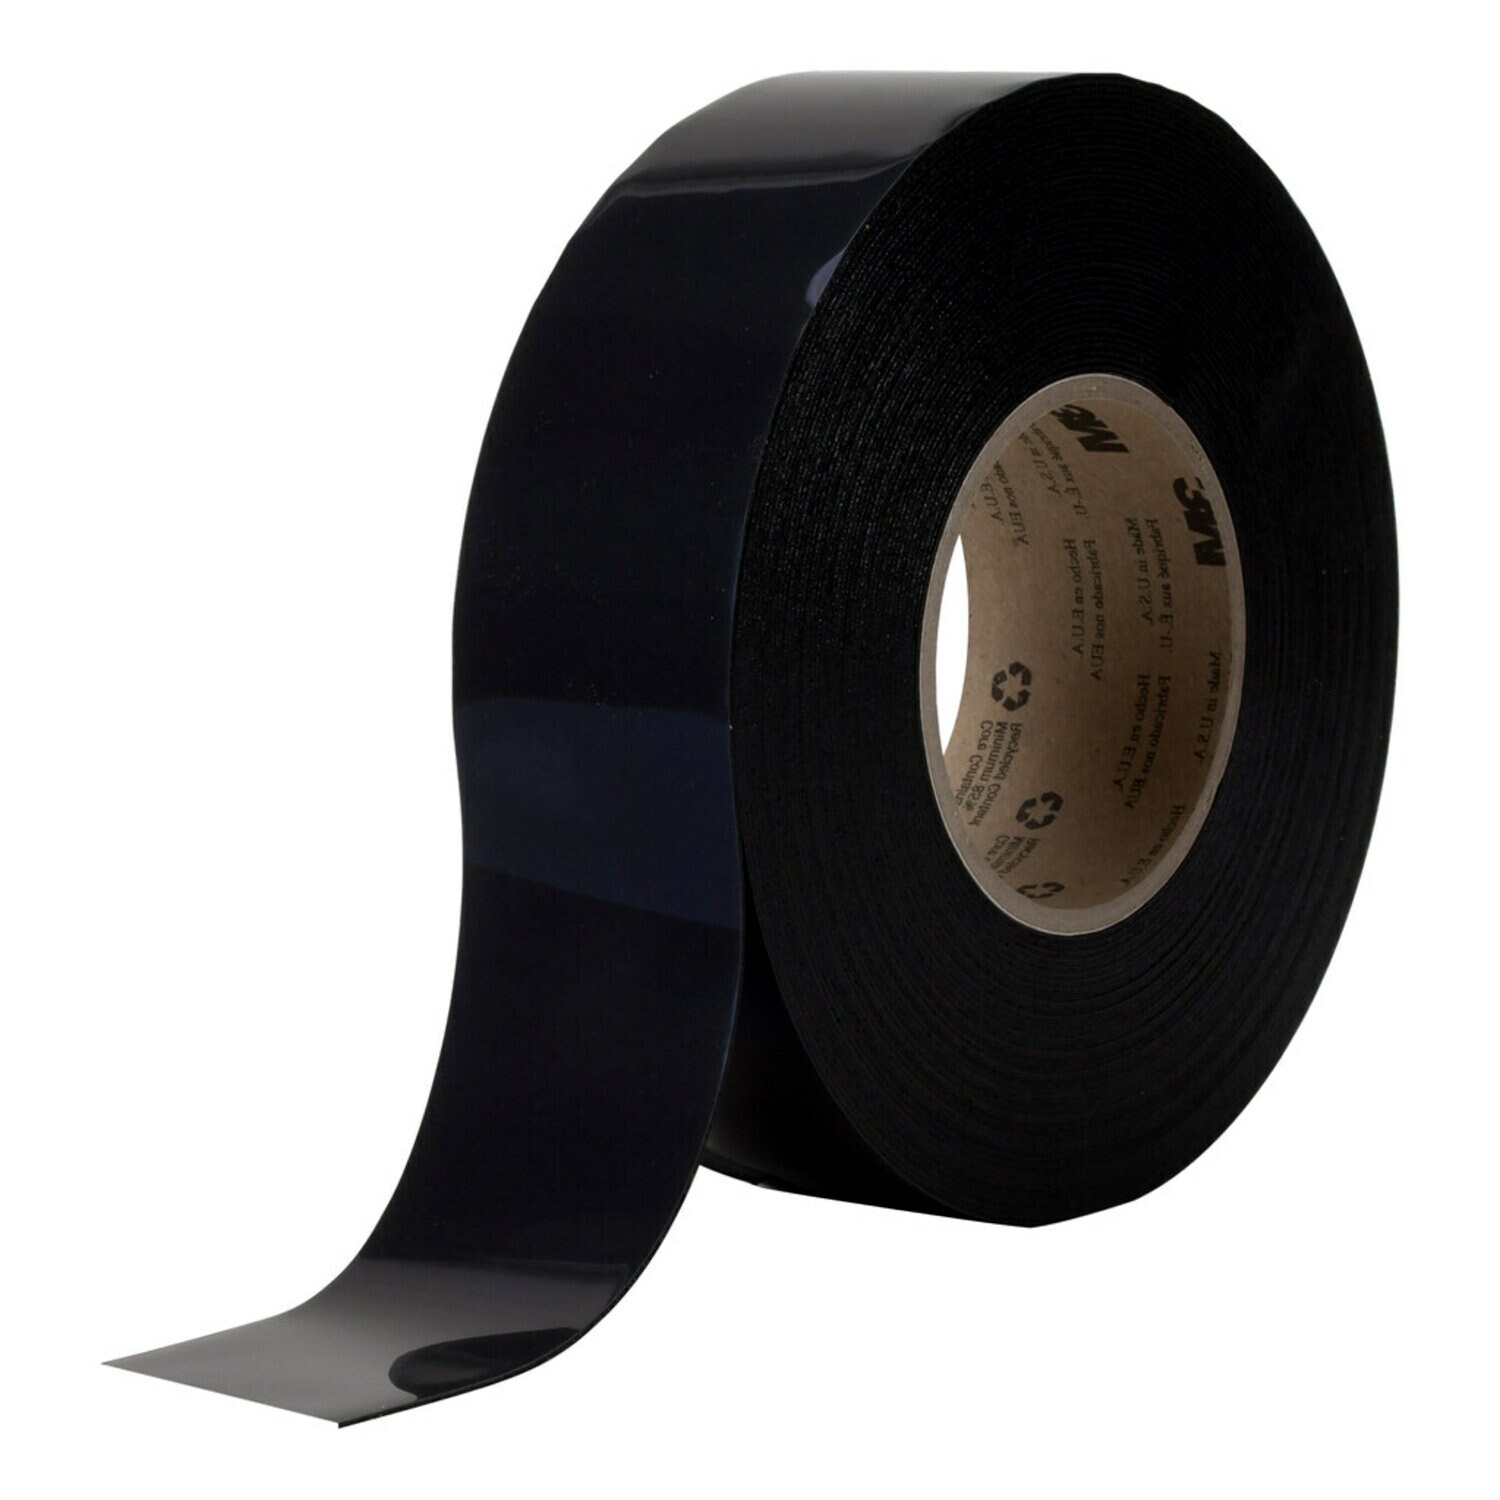 7010511037 - 3M Extreme Sealing Tape 4411B, Black, 3 in x 36 yd, 40 mil, 3 rolls per
case